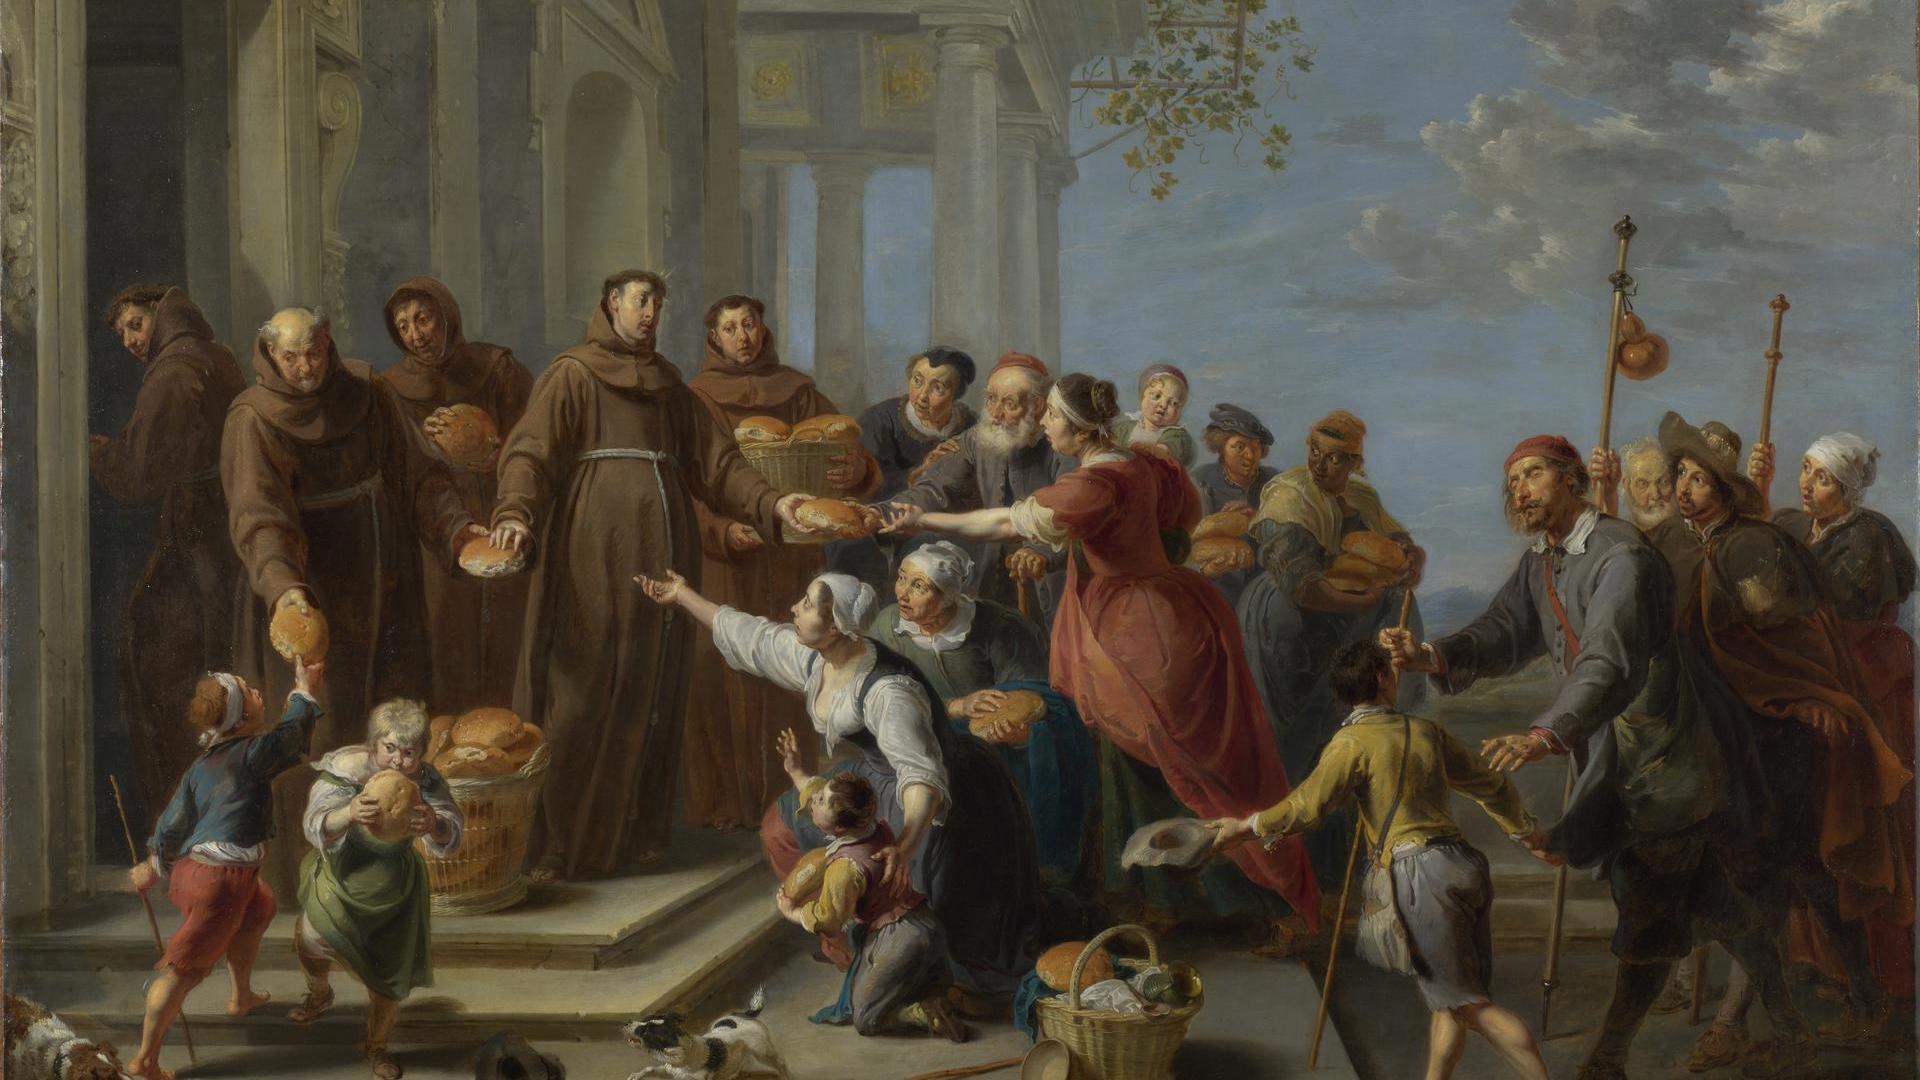 Saint Anthony of Padua (?) distributing Bread by Willem van Herp the Elder